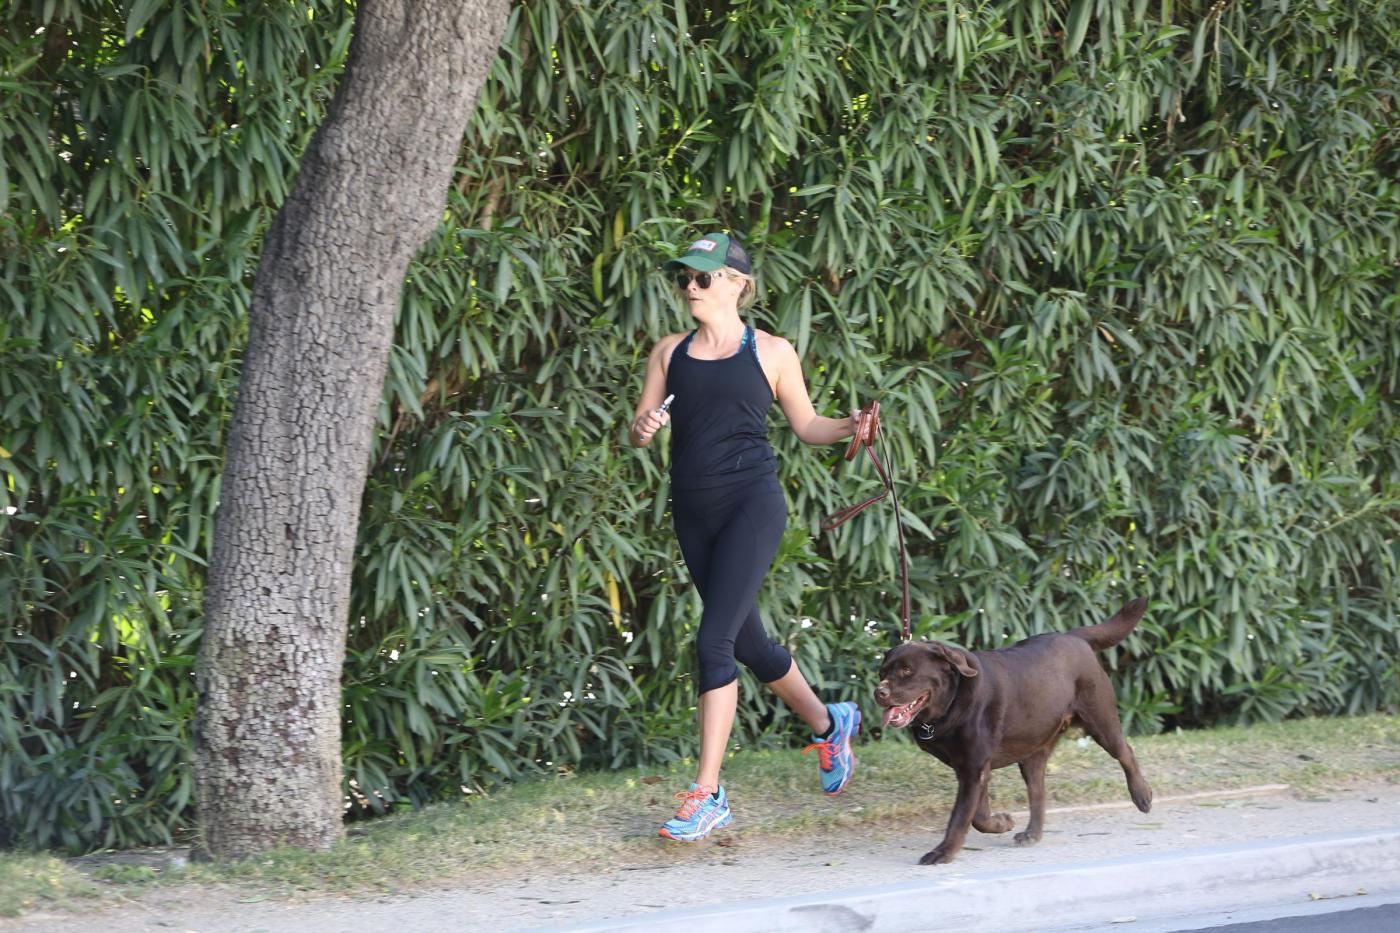 Reese Witherspoon, jogging in compagnia del suo labrador a Brentonwood12